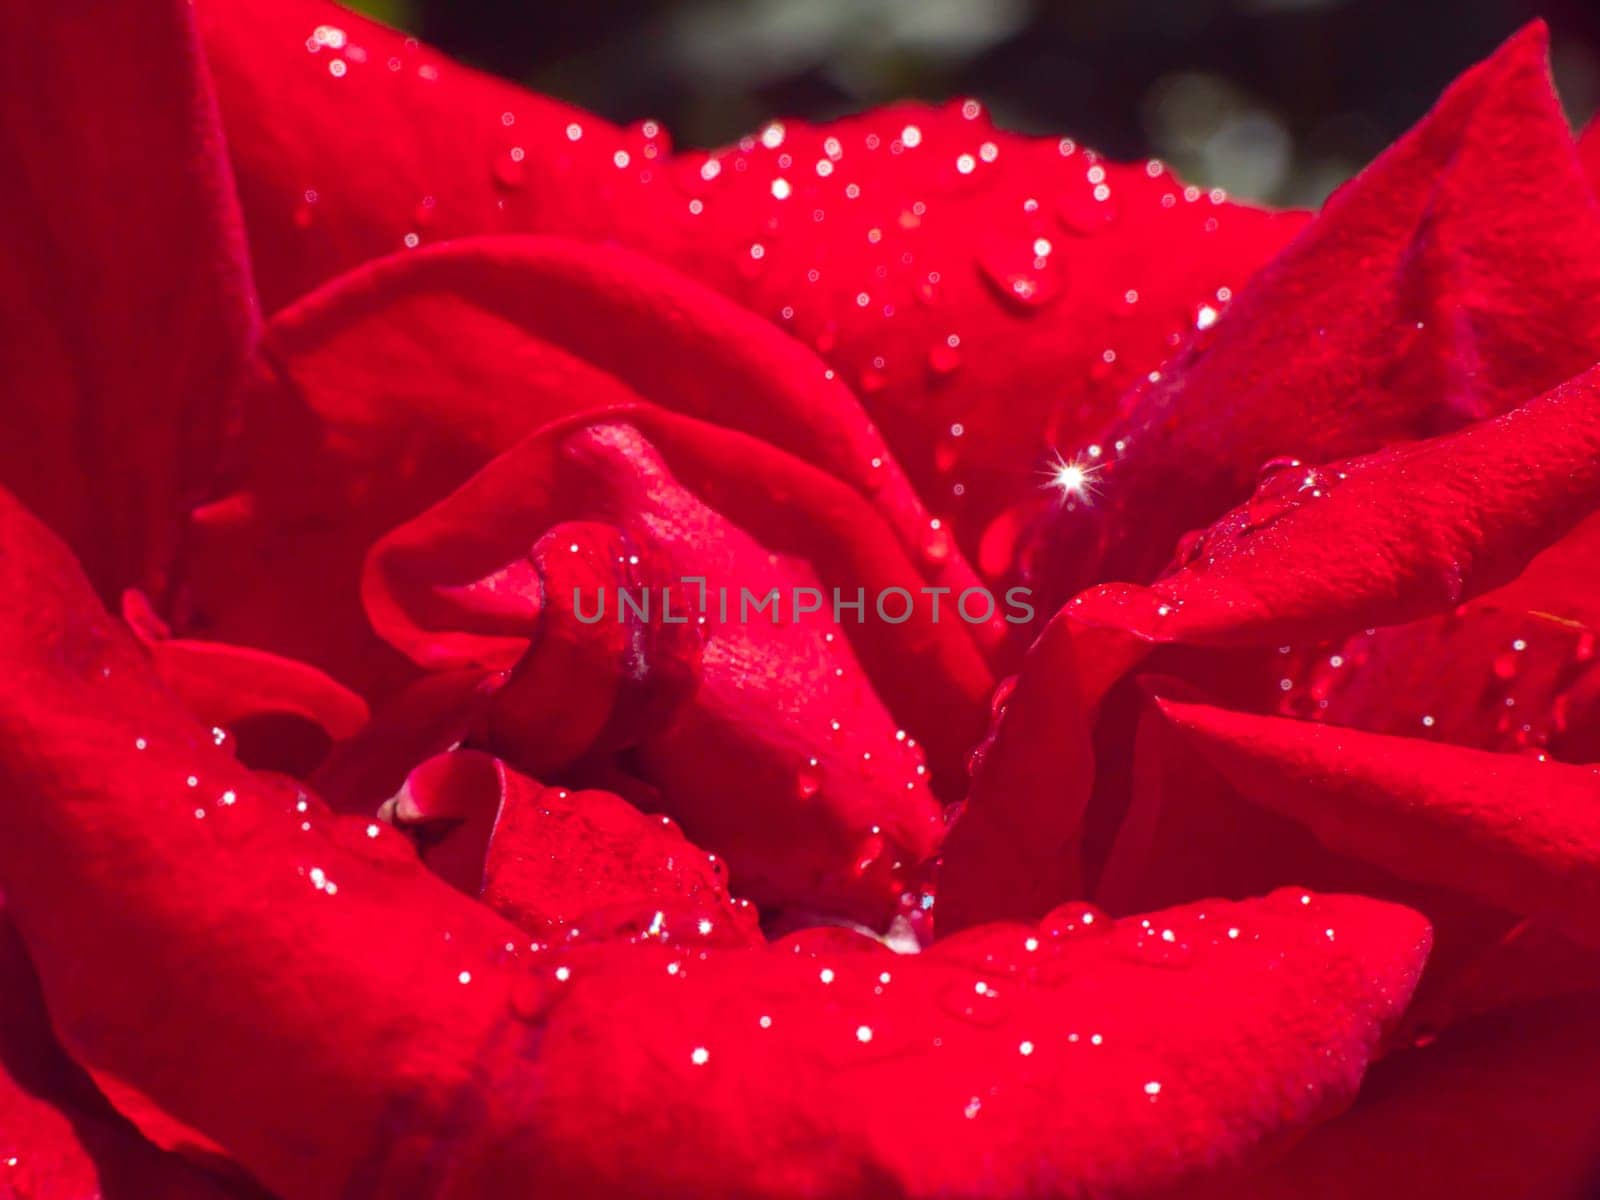 red rose in garden raindrops by alex_nako